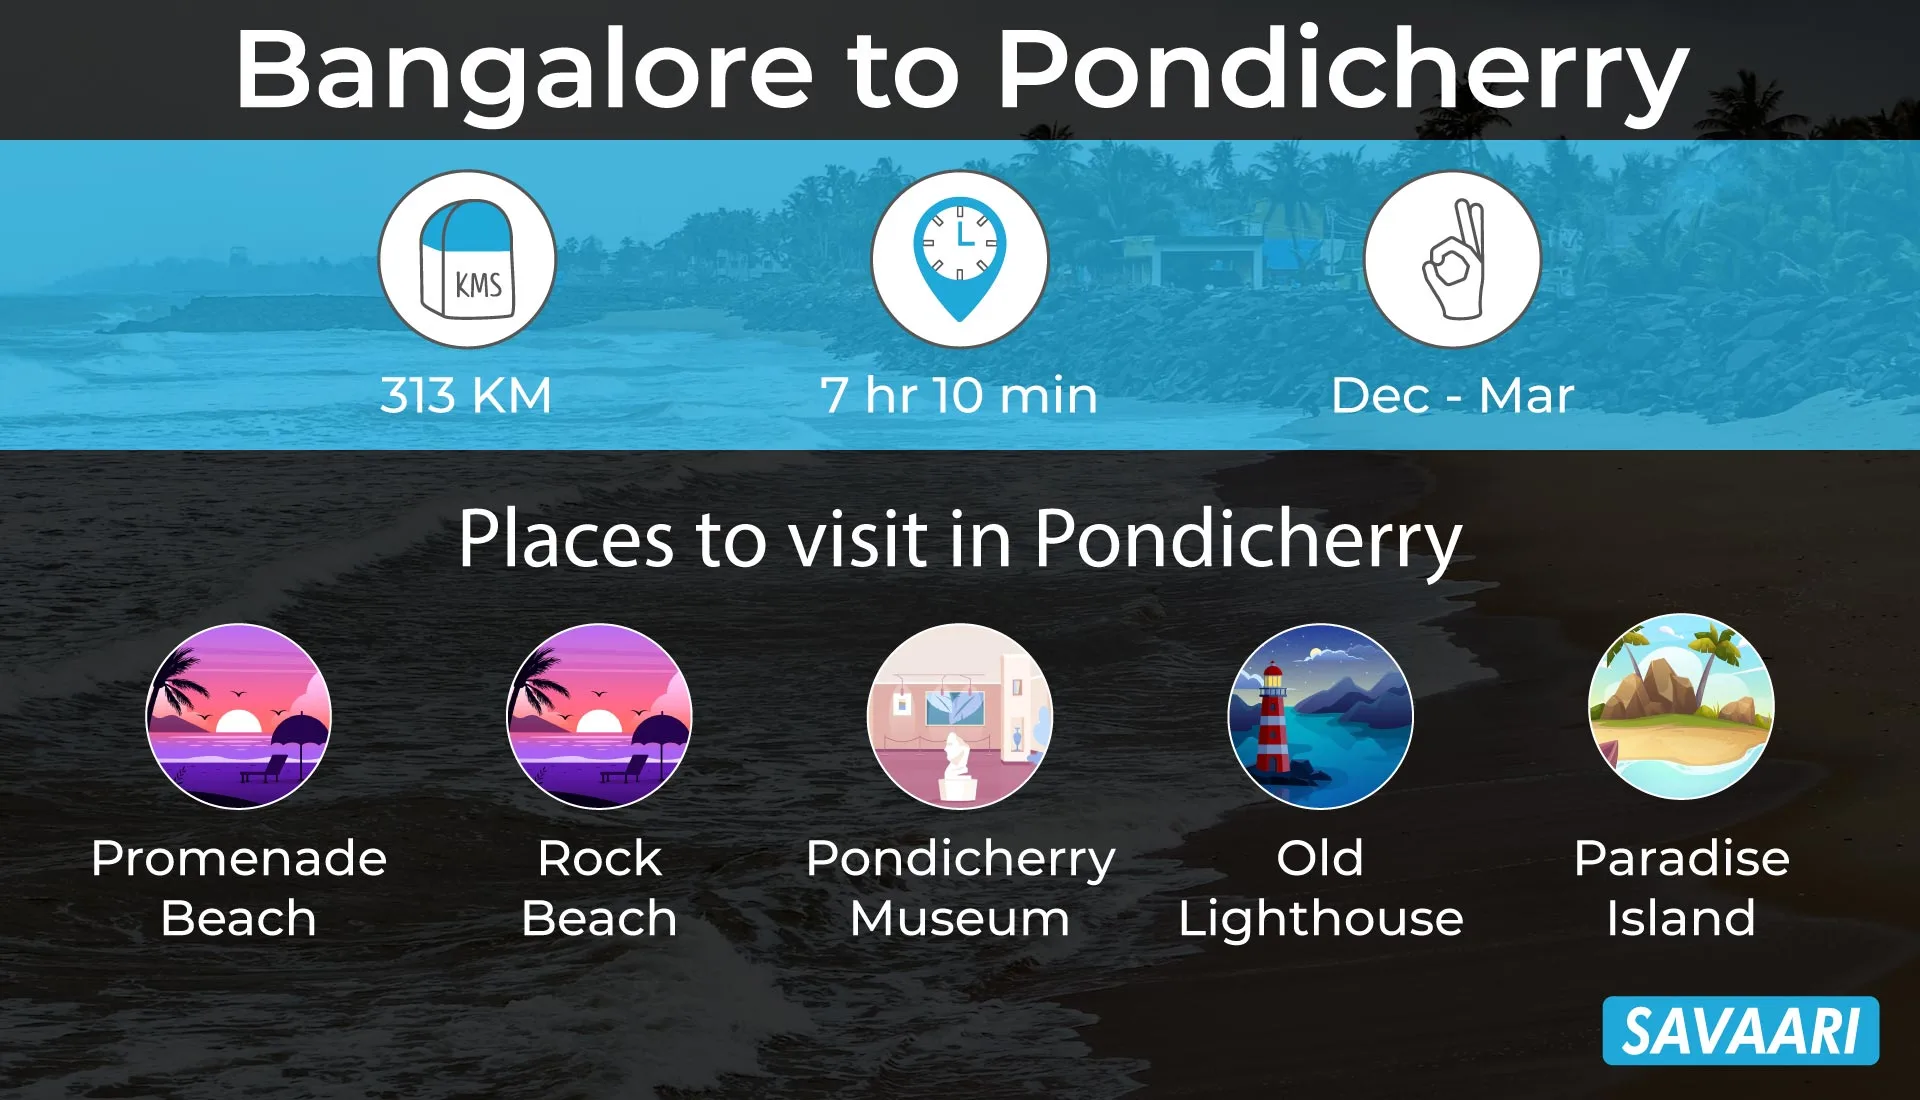 Bangalore to Pondicherry Beach road trip